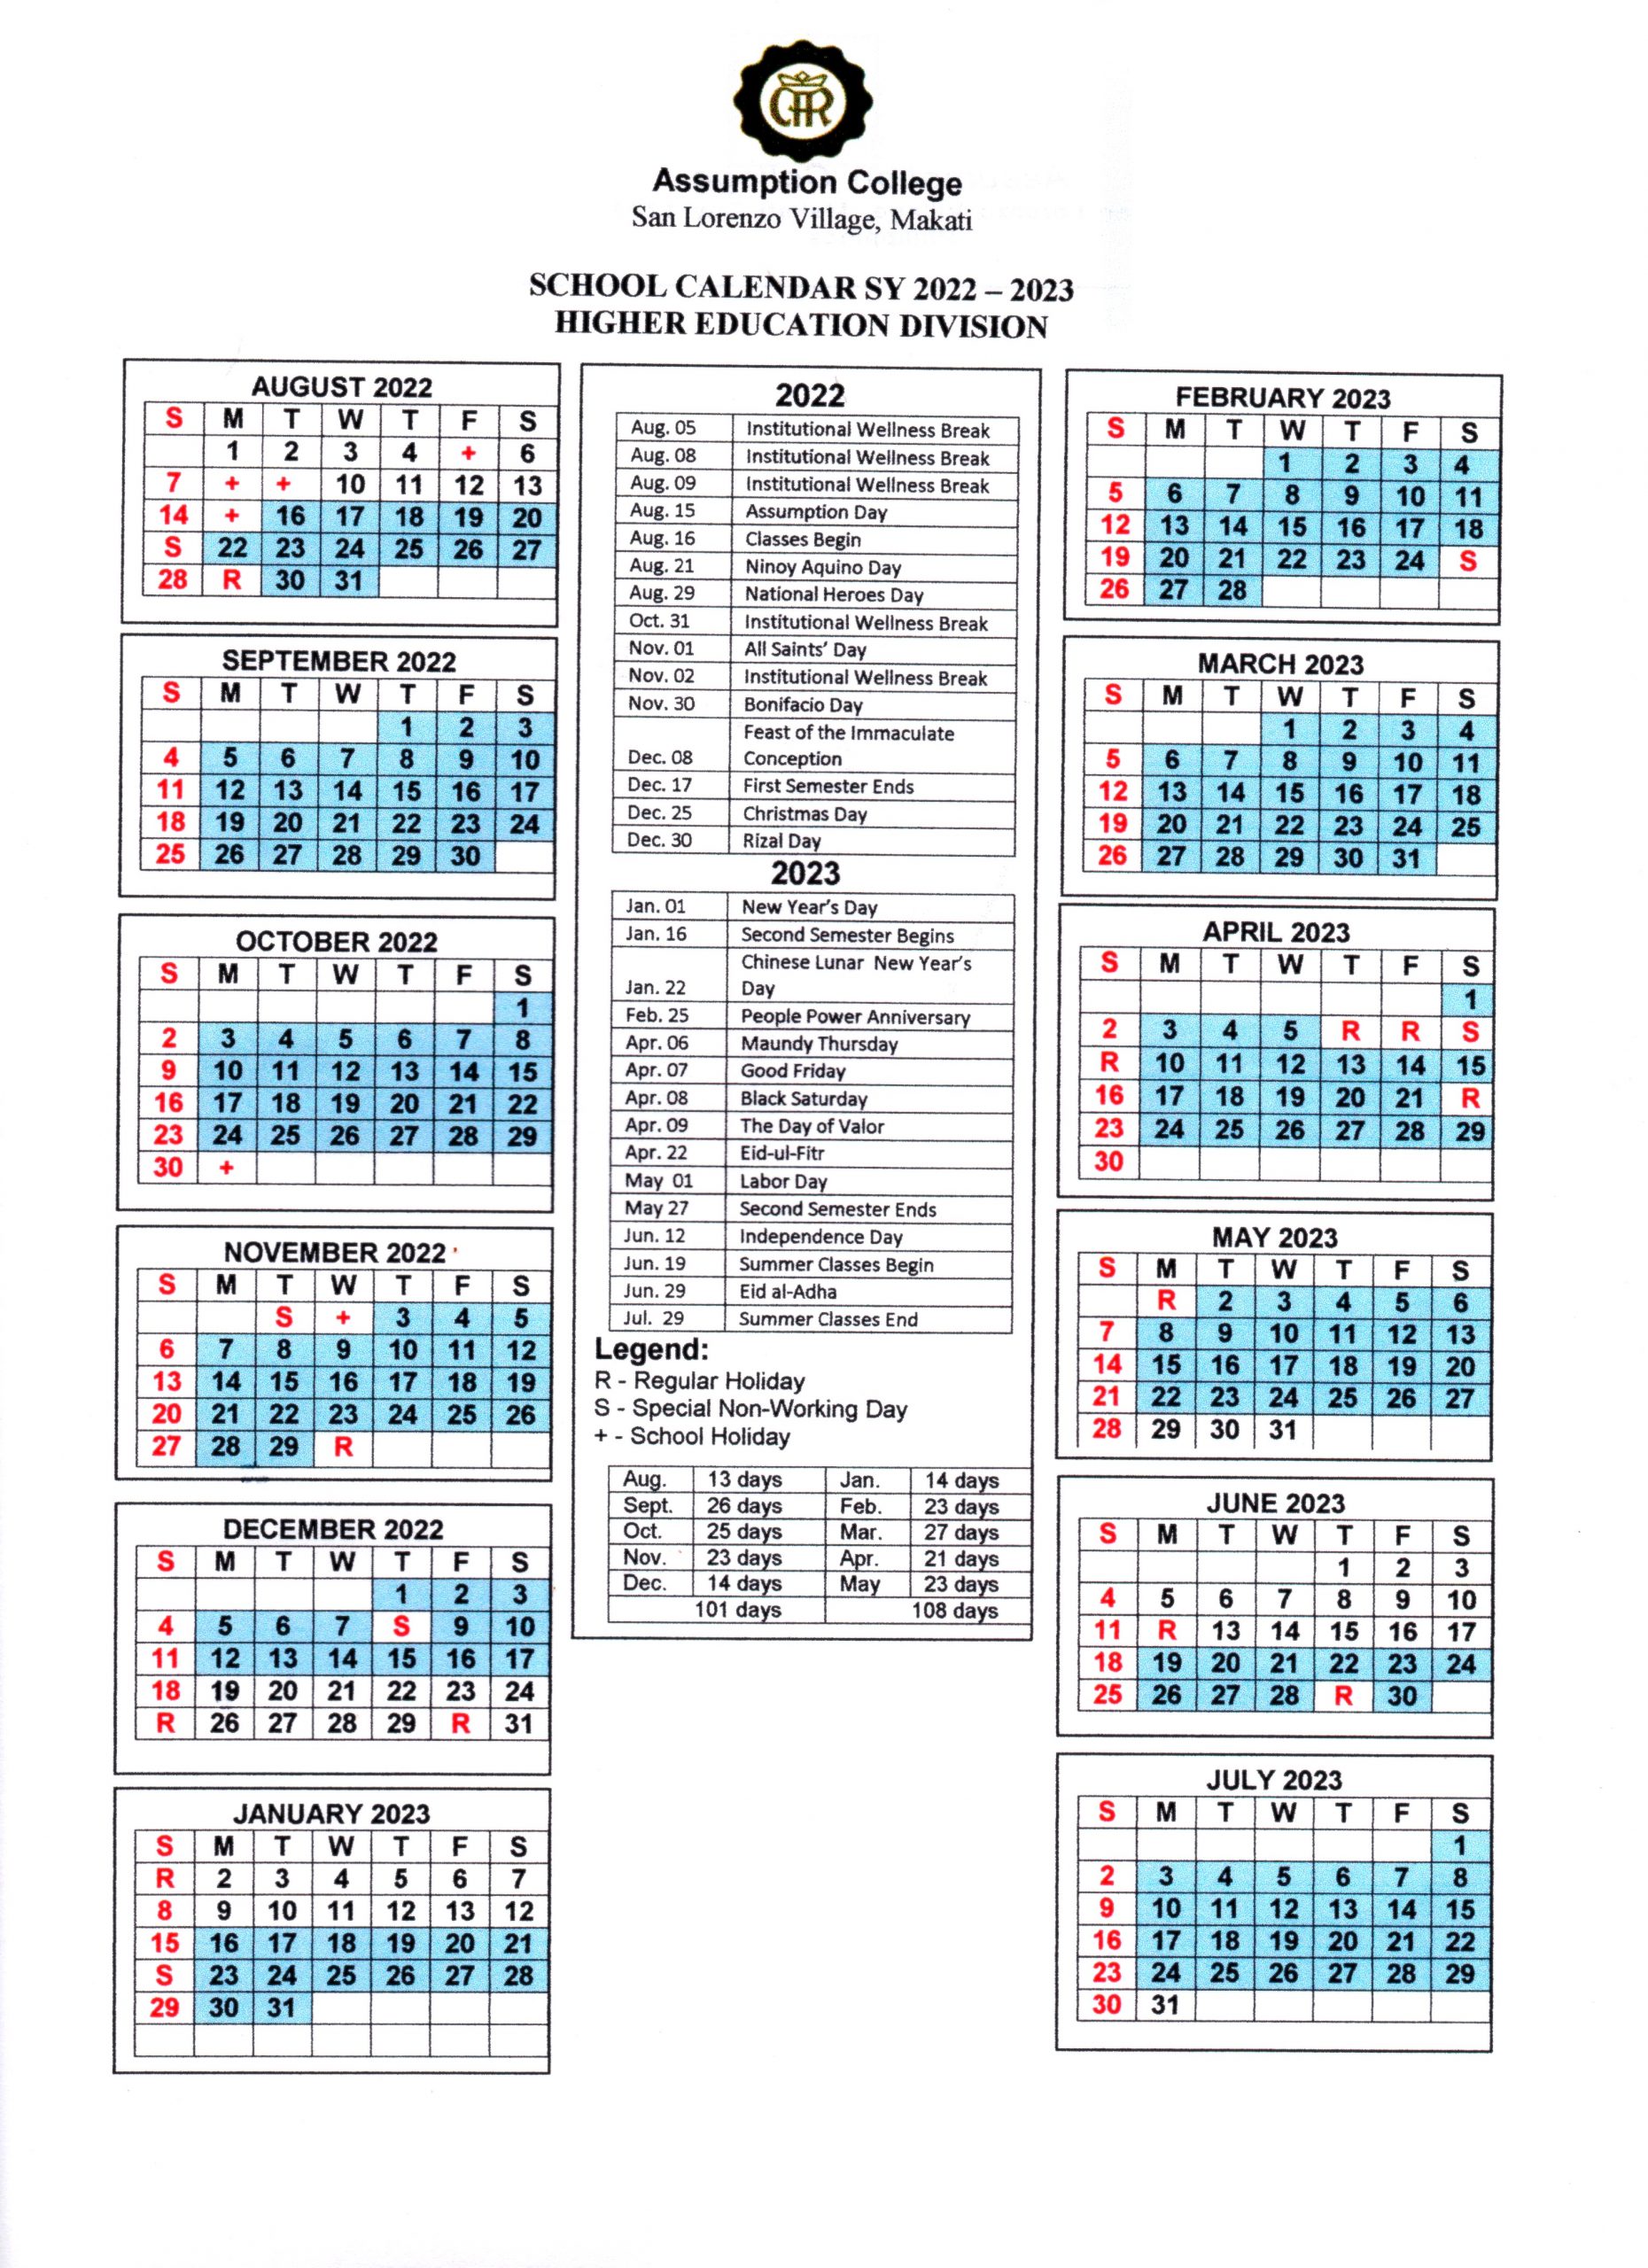 ateneo-de-zamboanga-university-school-calendar-sy-2022-2023-images